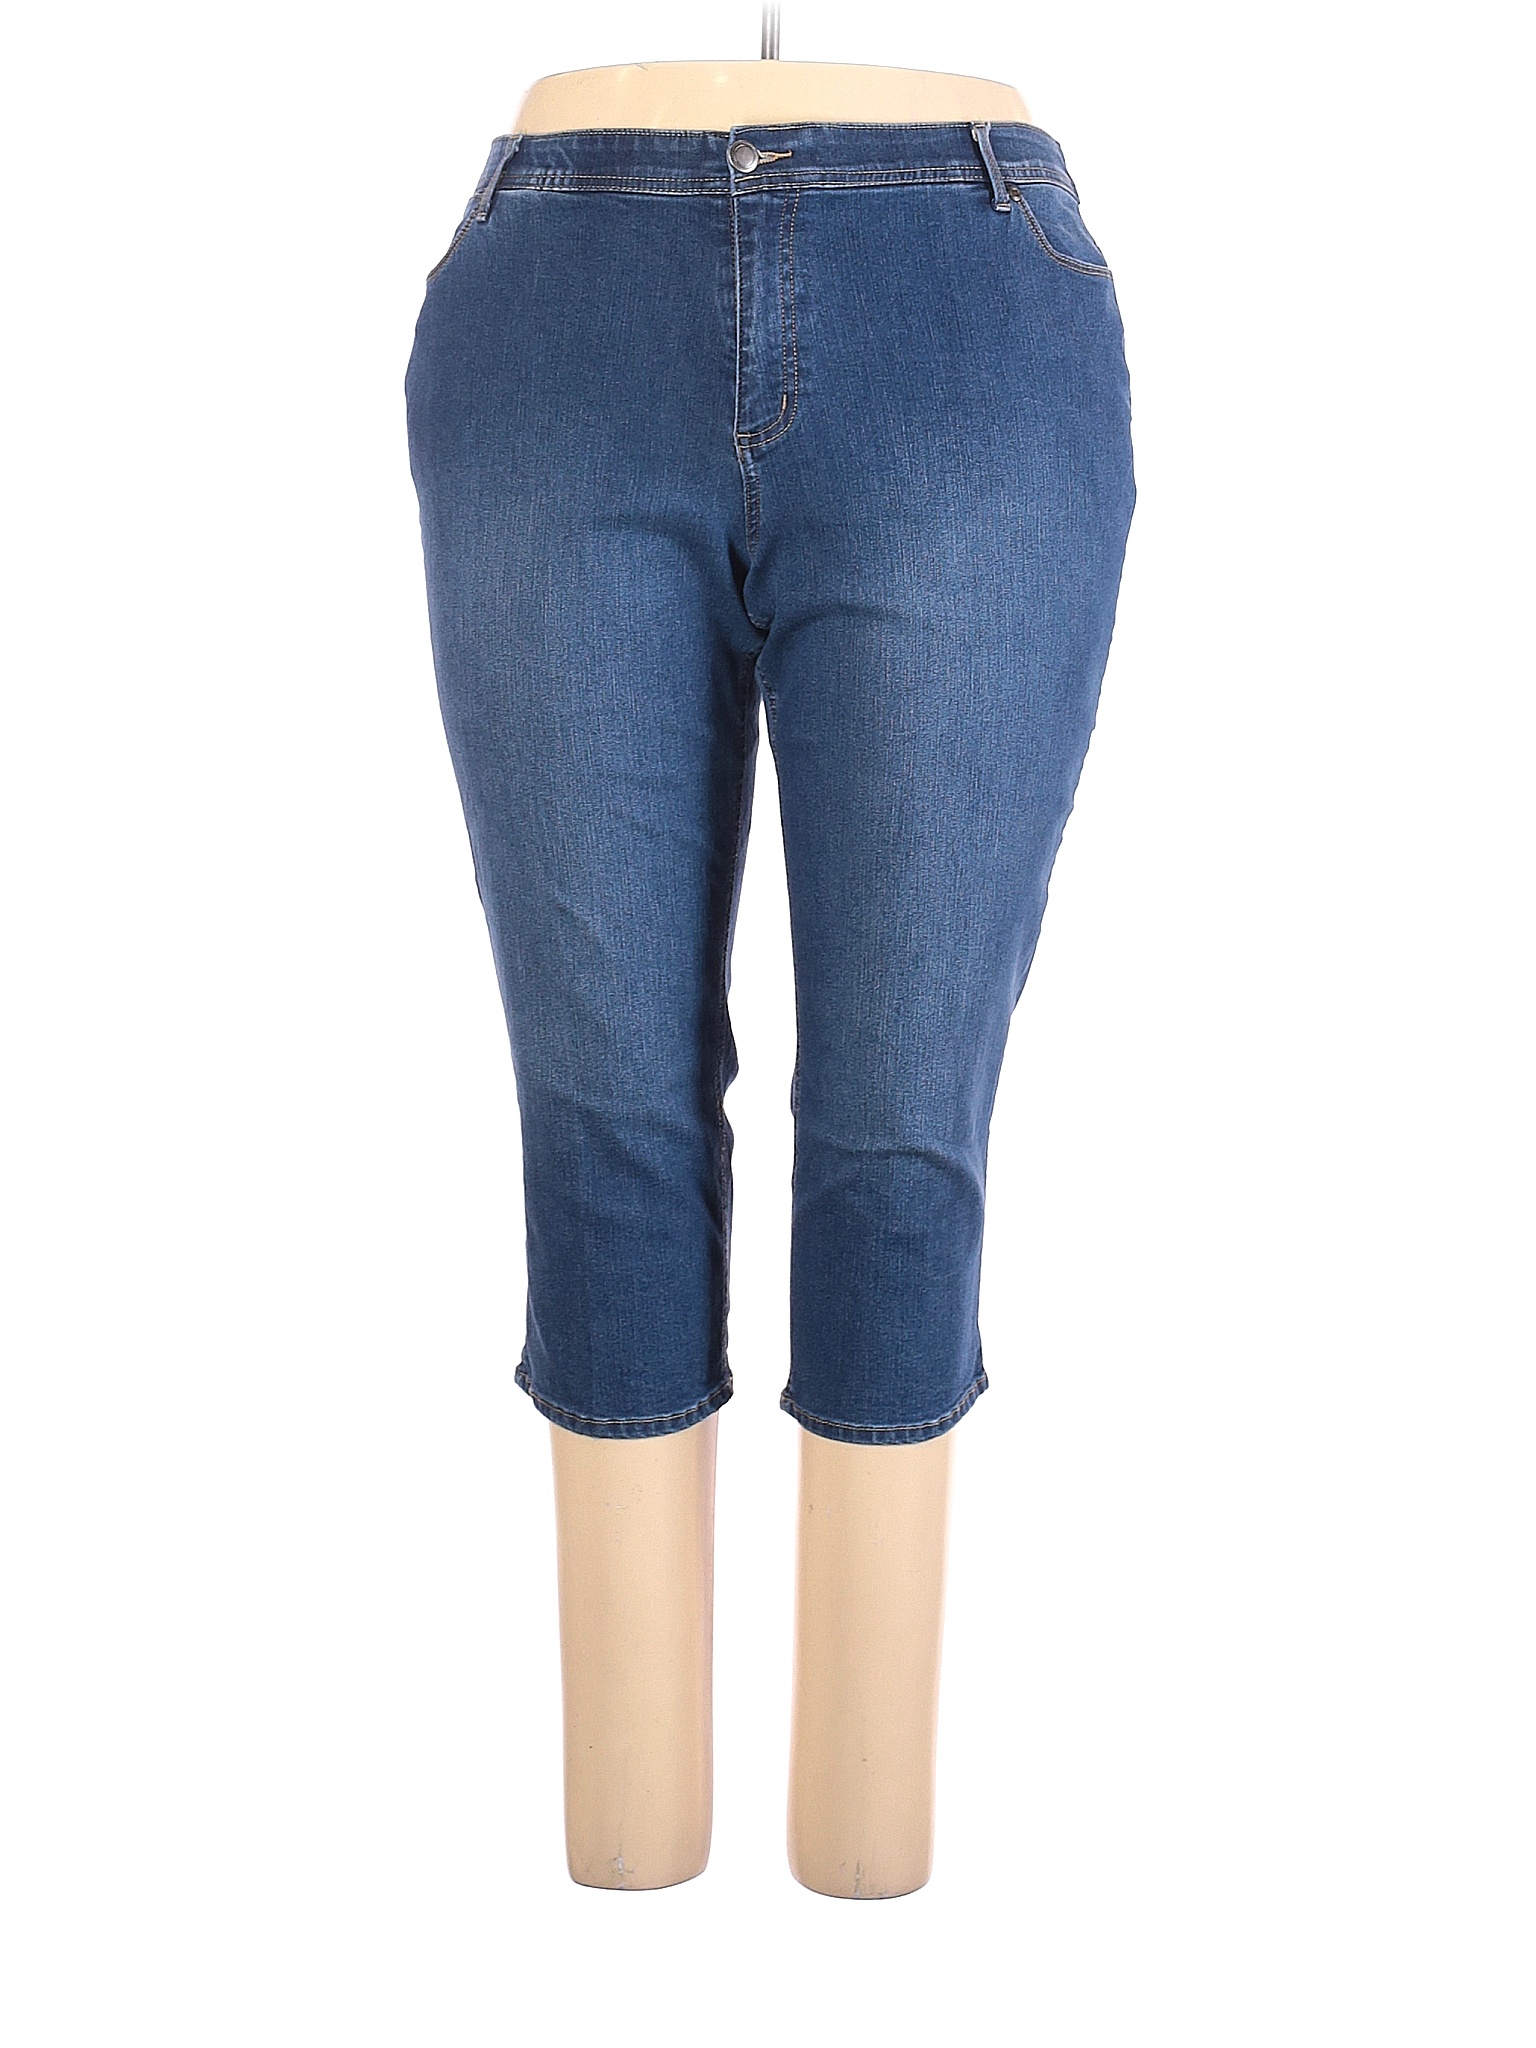 Cj Banks Solid Blue Jeans Size 18 (Plus) - 67% off | thredUP